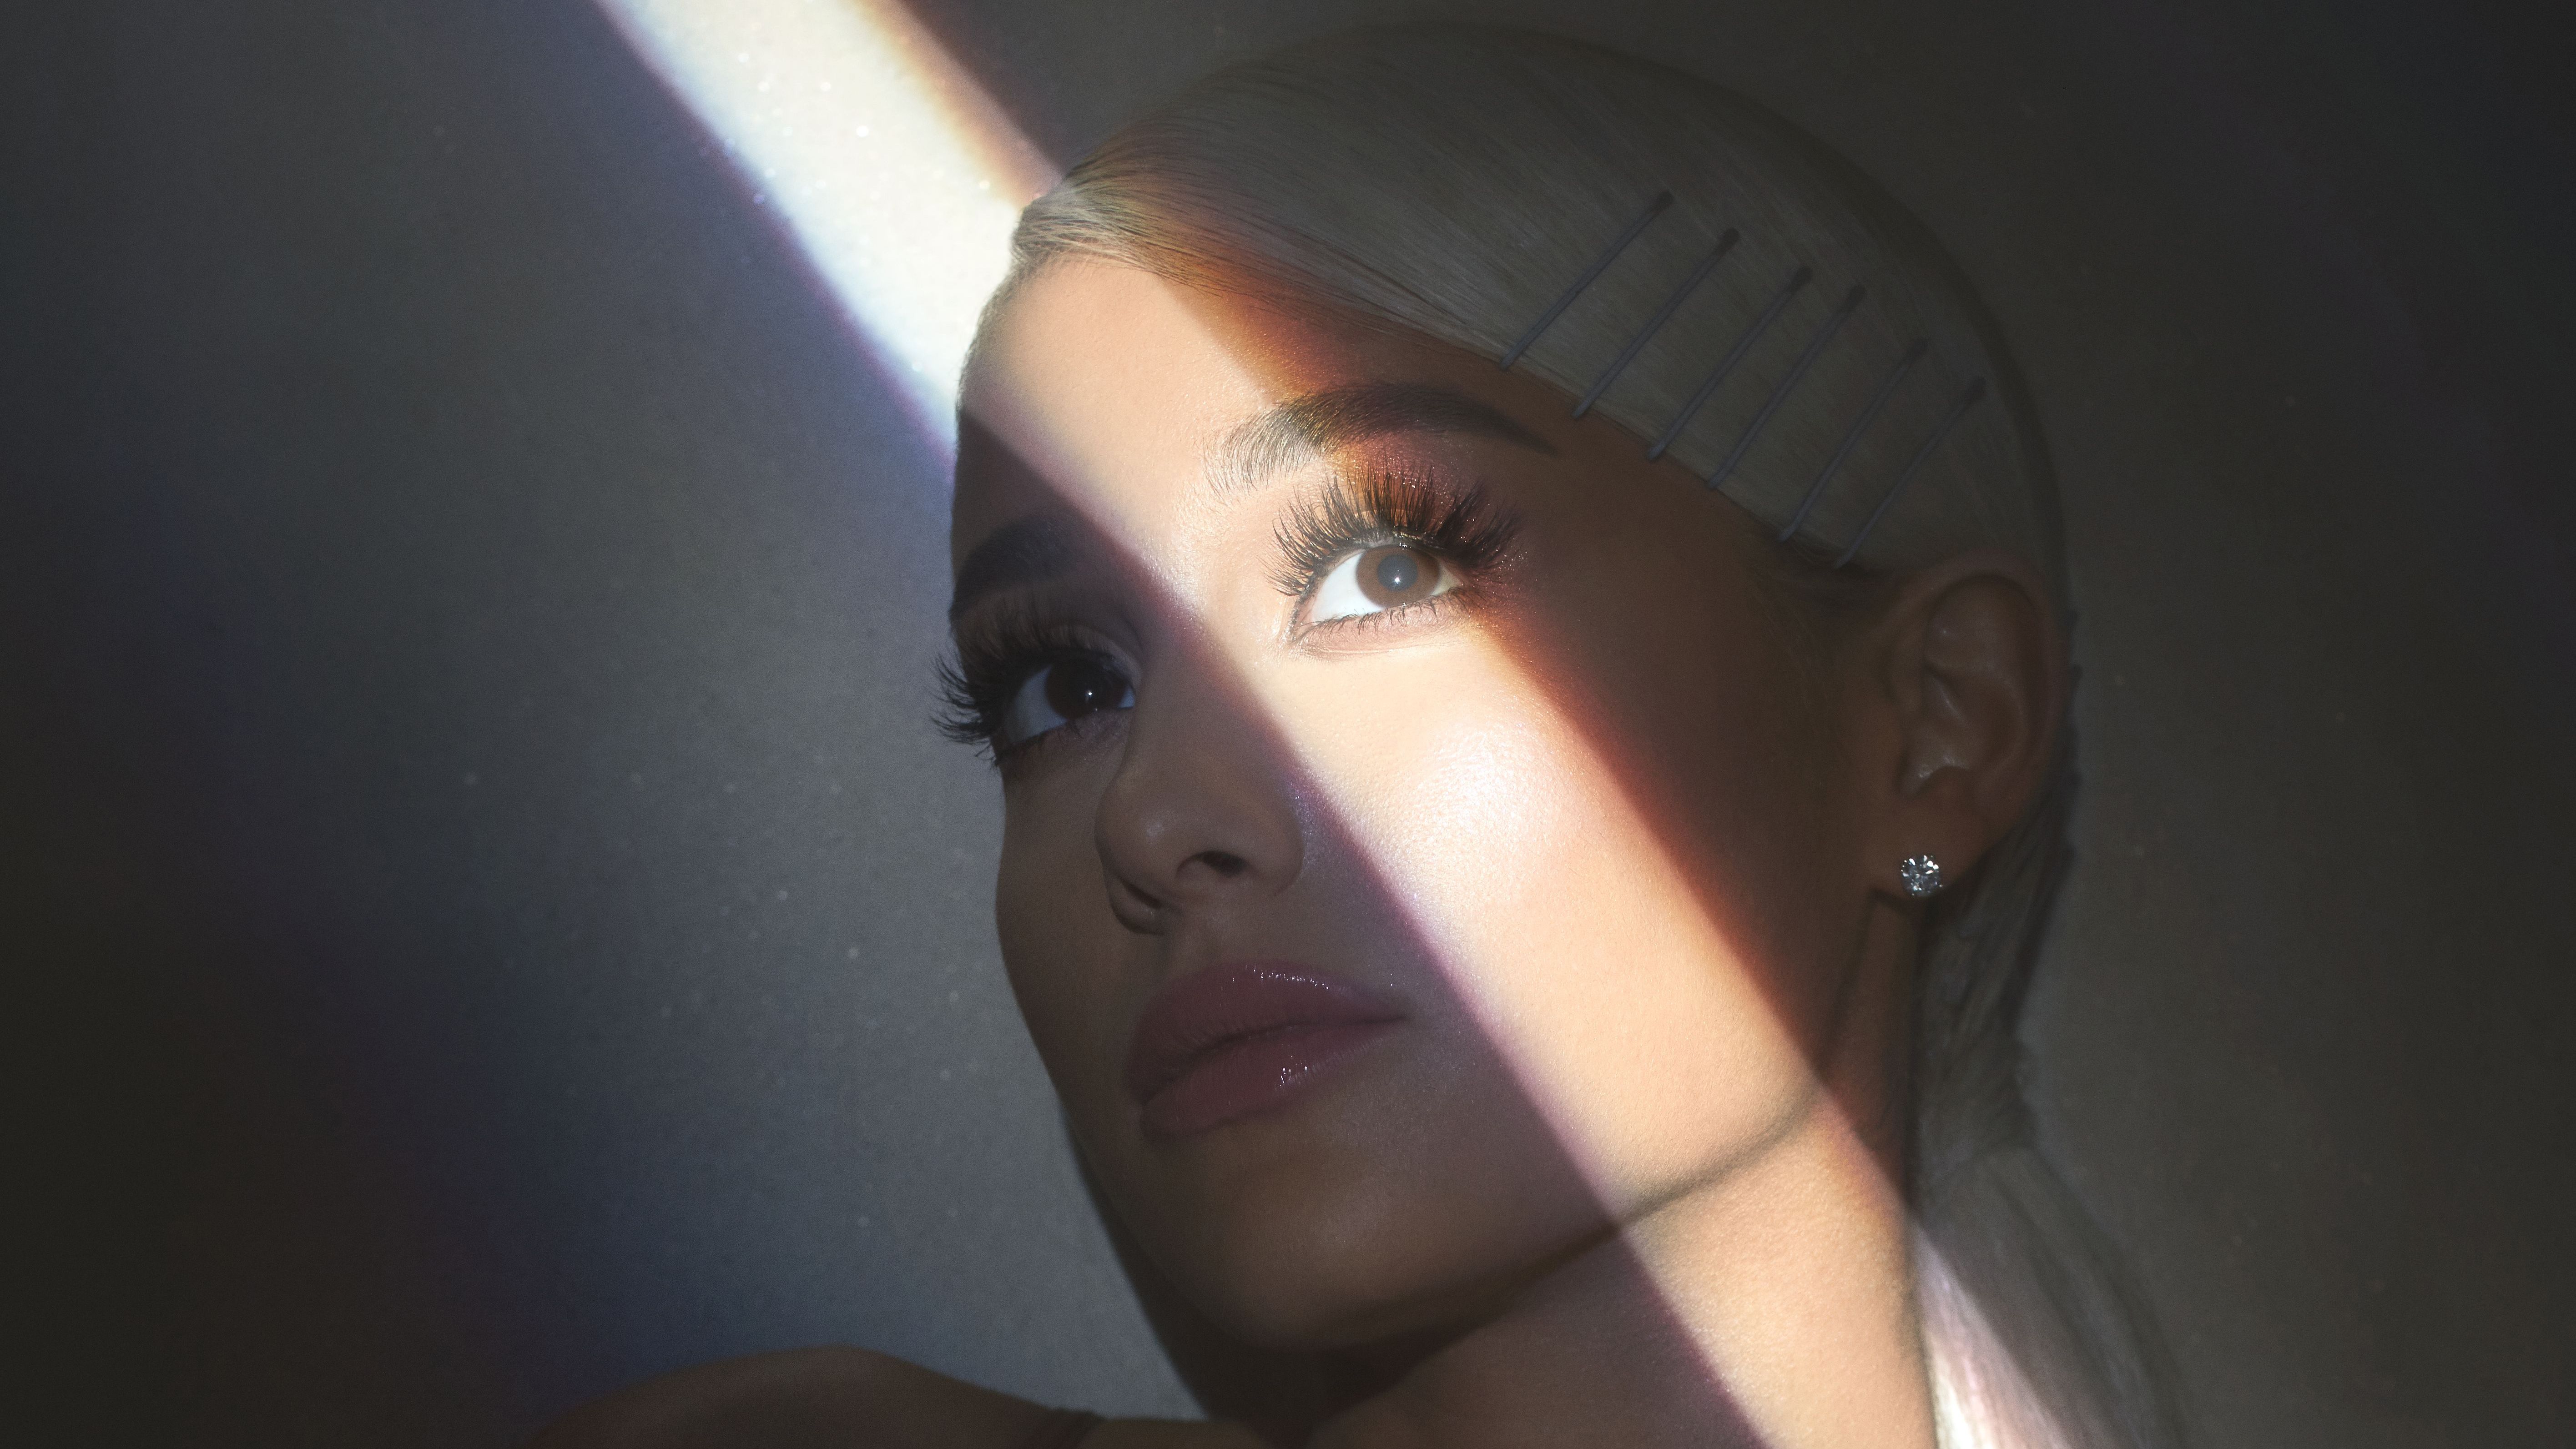 Ariana Grande Portrait 2018 Wallpapers